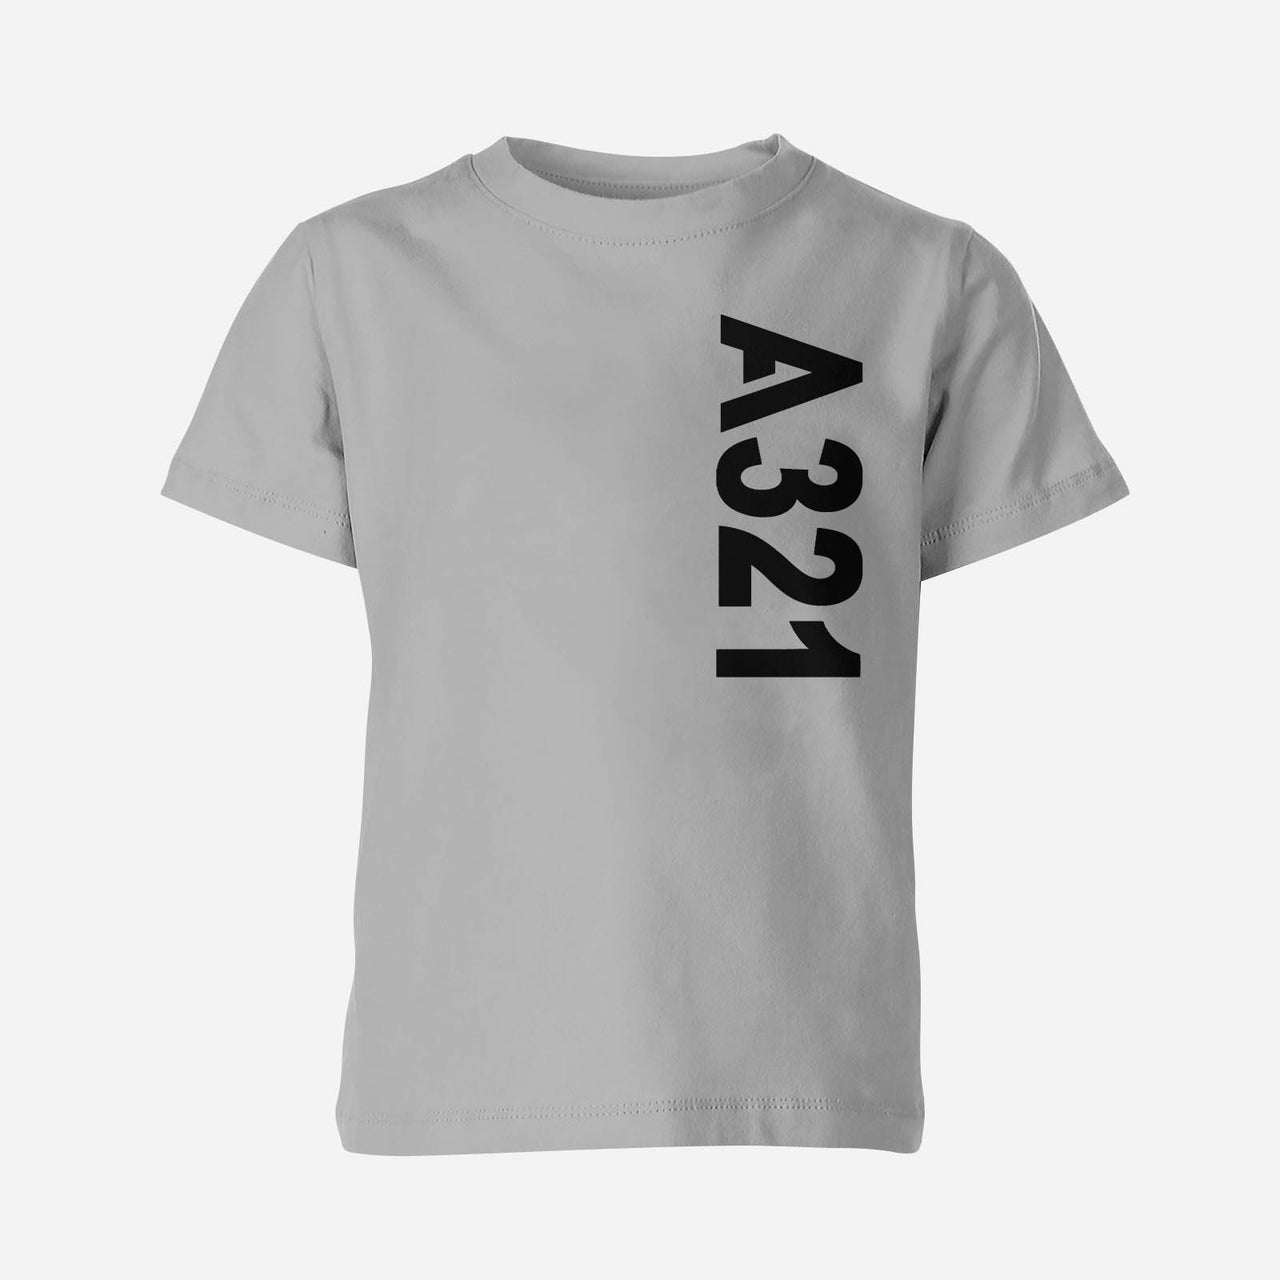 A321 Side Text Designed Children T-Shirts